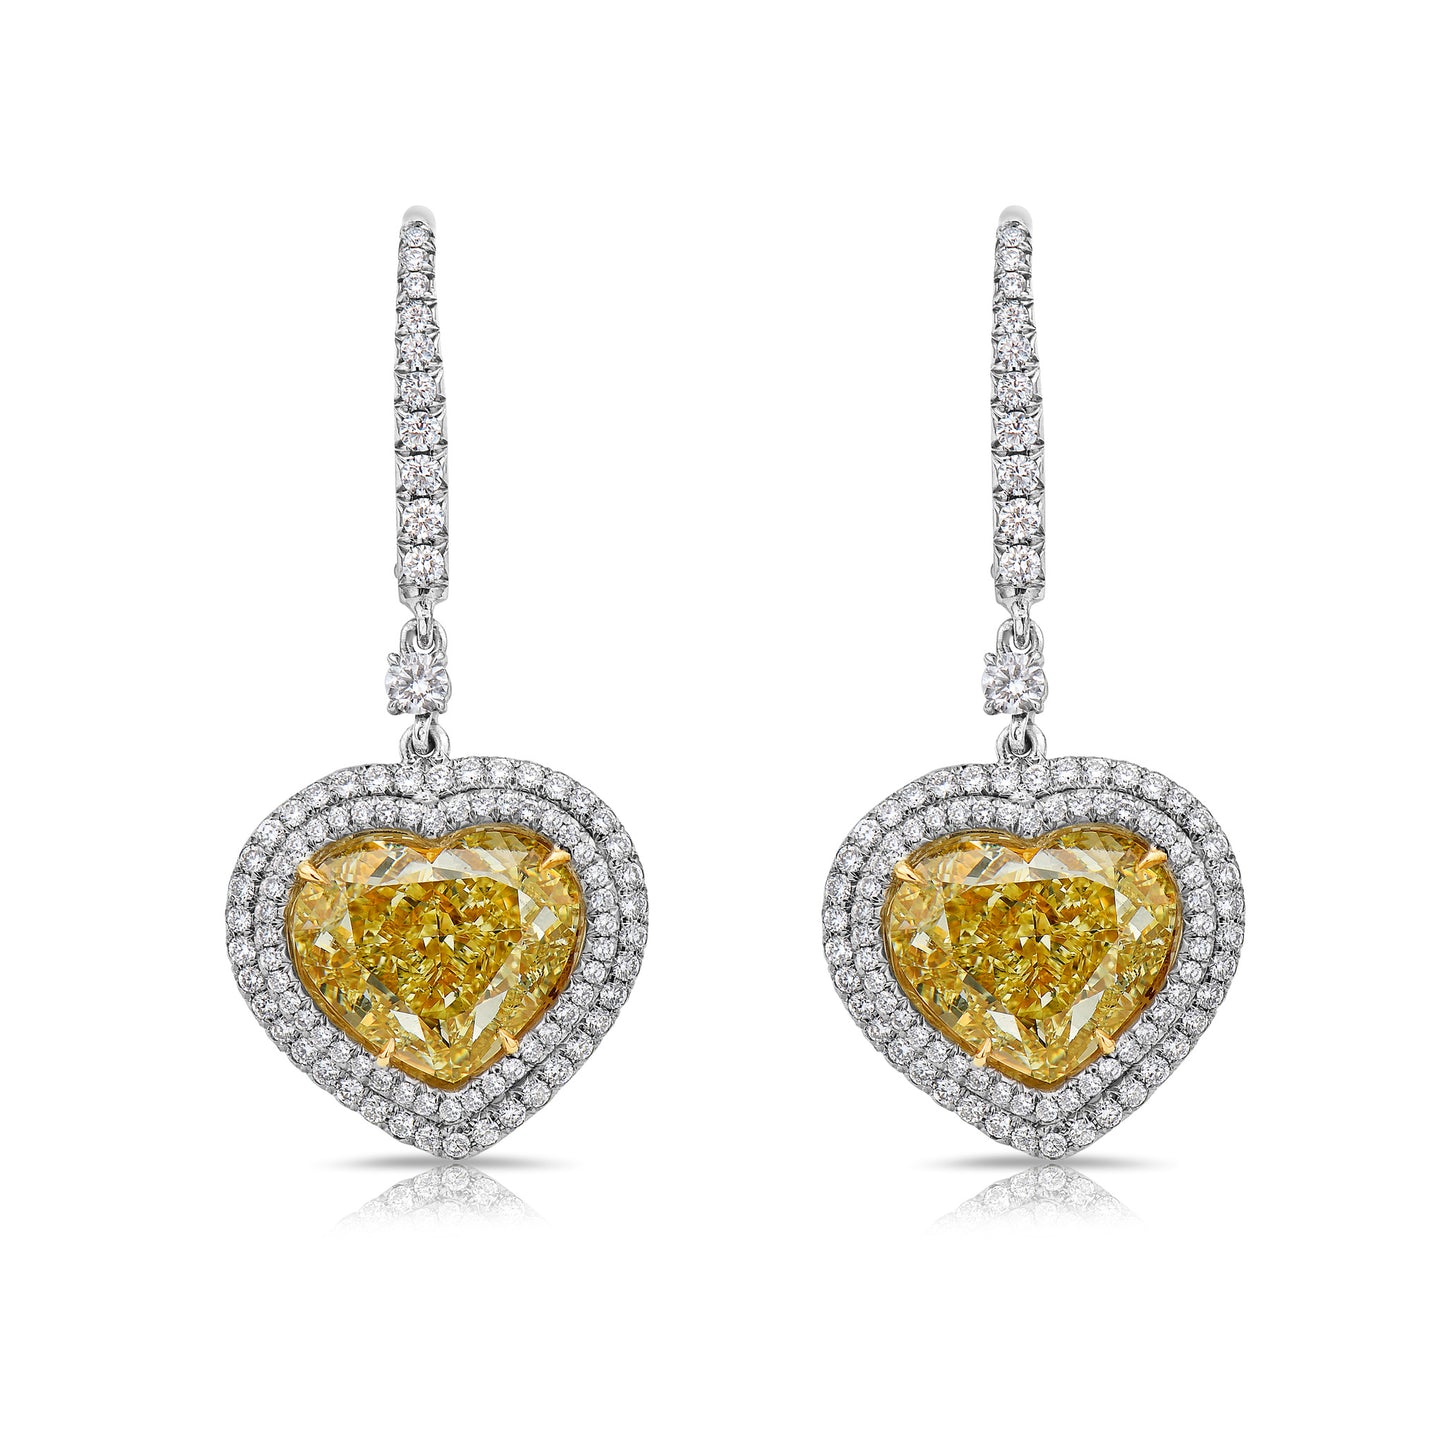 Red carpet yellow diamond earrings. Yellow heart diamond earrings. 10 carat yellow diamond earrings. Yellow diamond drop earrings. Diamond drop earrings. Luxury diamond earrings.